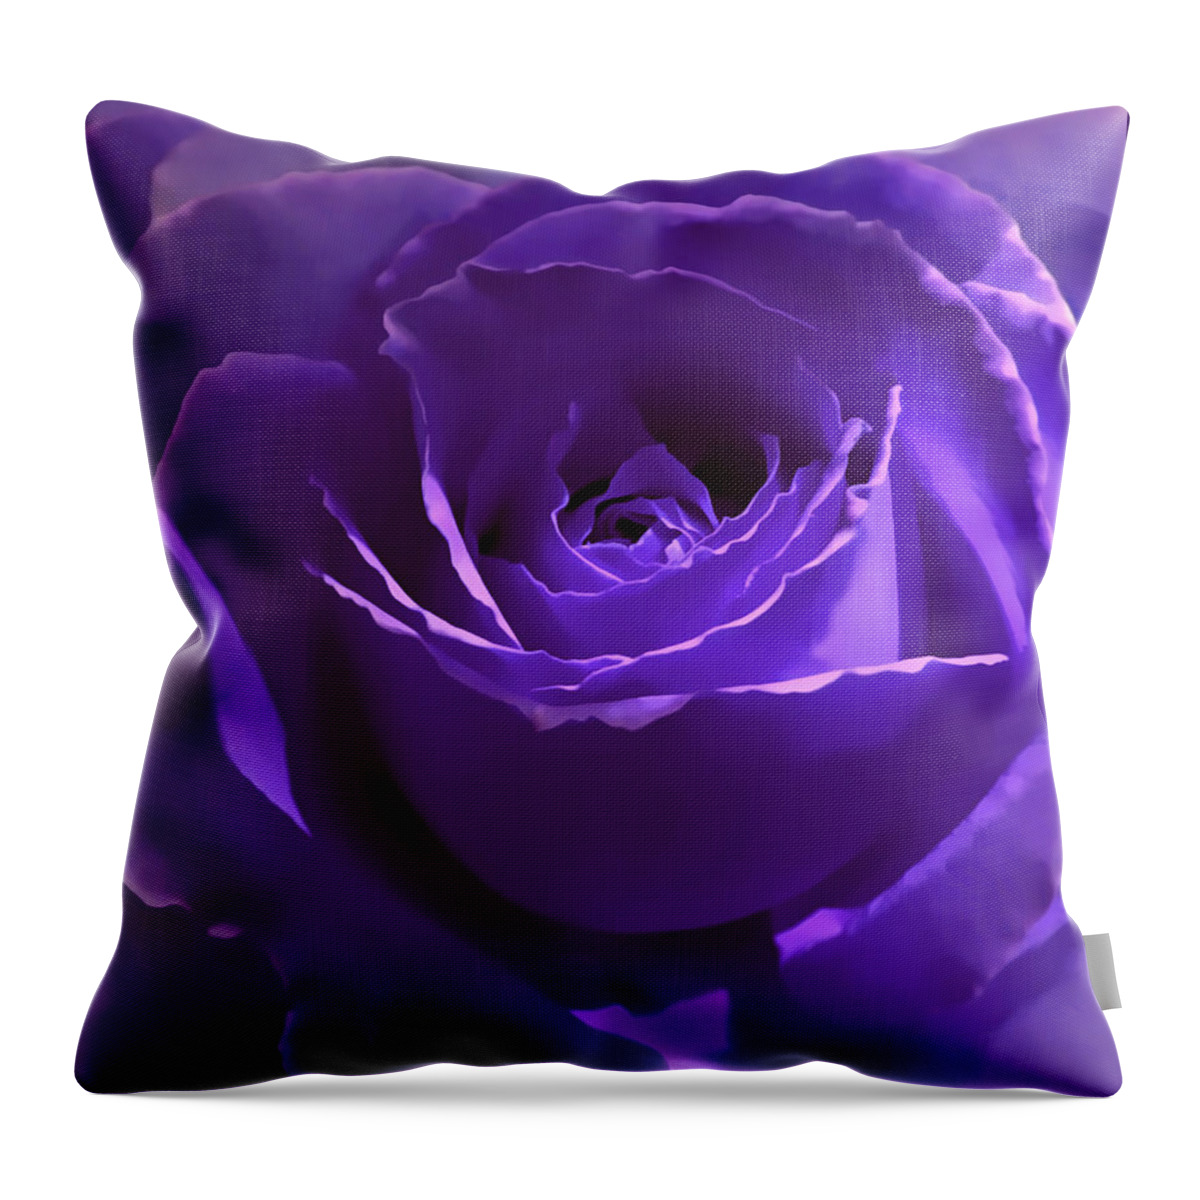 Rose Throw Pillow featuring the photograph Dark Secrets Purple Rose by Jennie Marie Schell